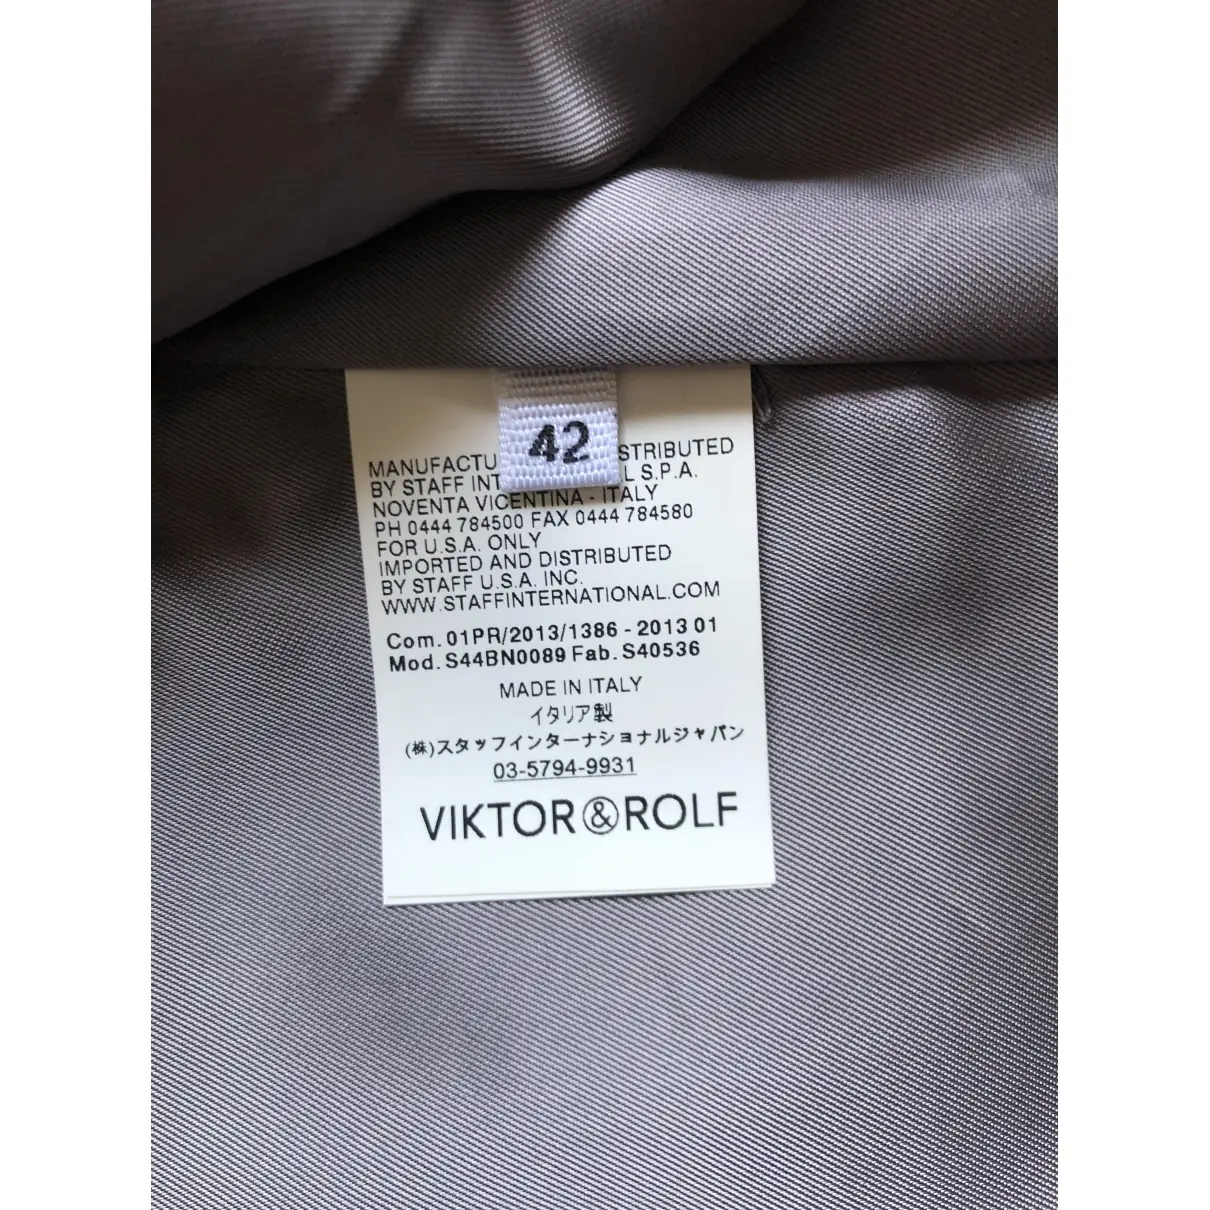 Viktor & Rolf Wool blazer for sale